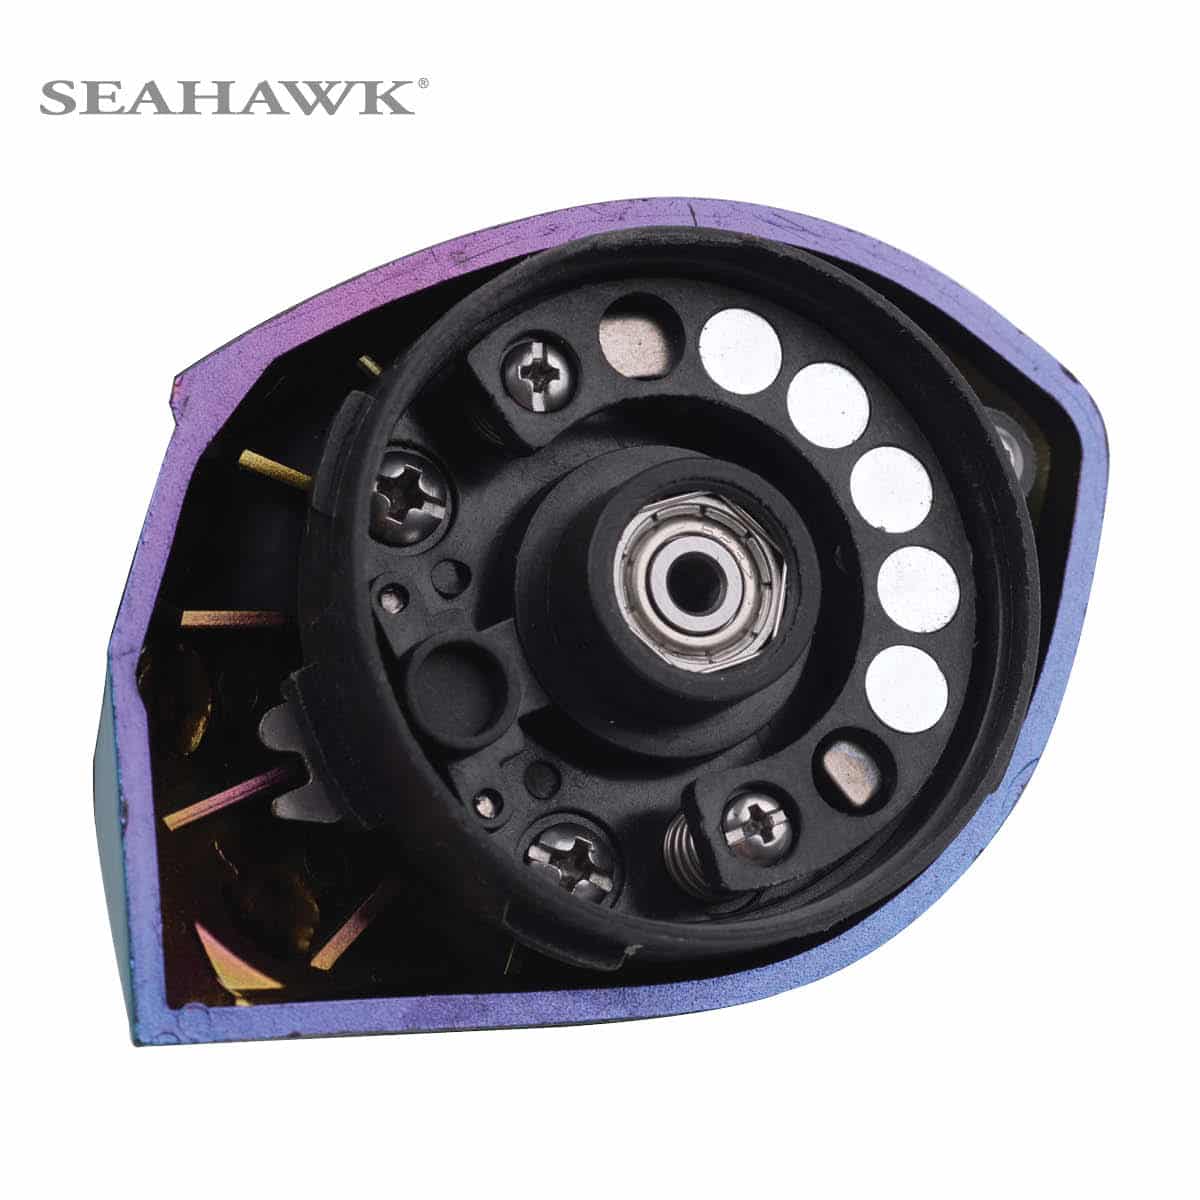 seahawk-iguana-11